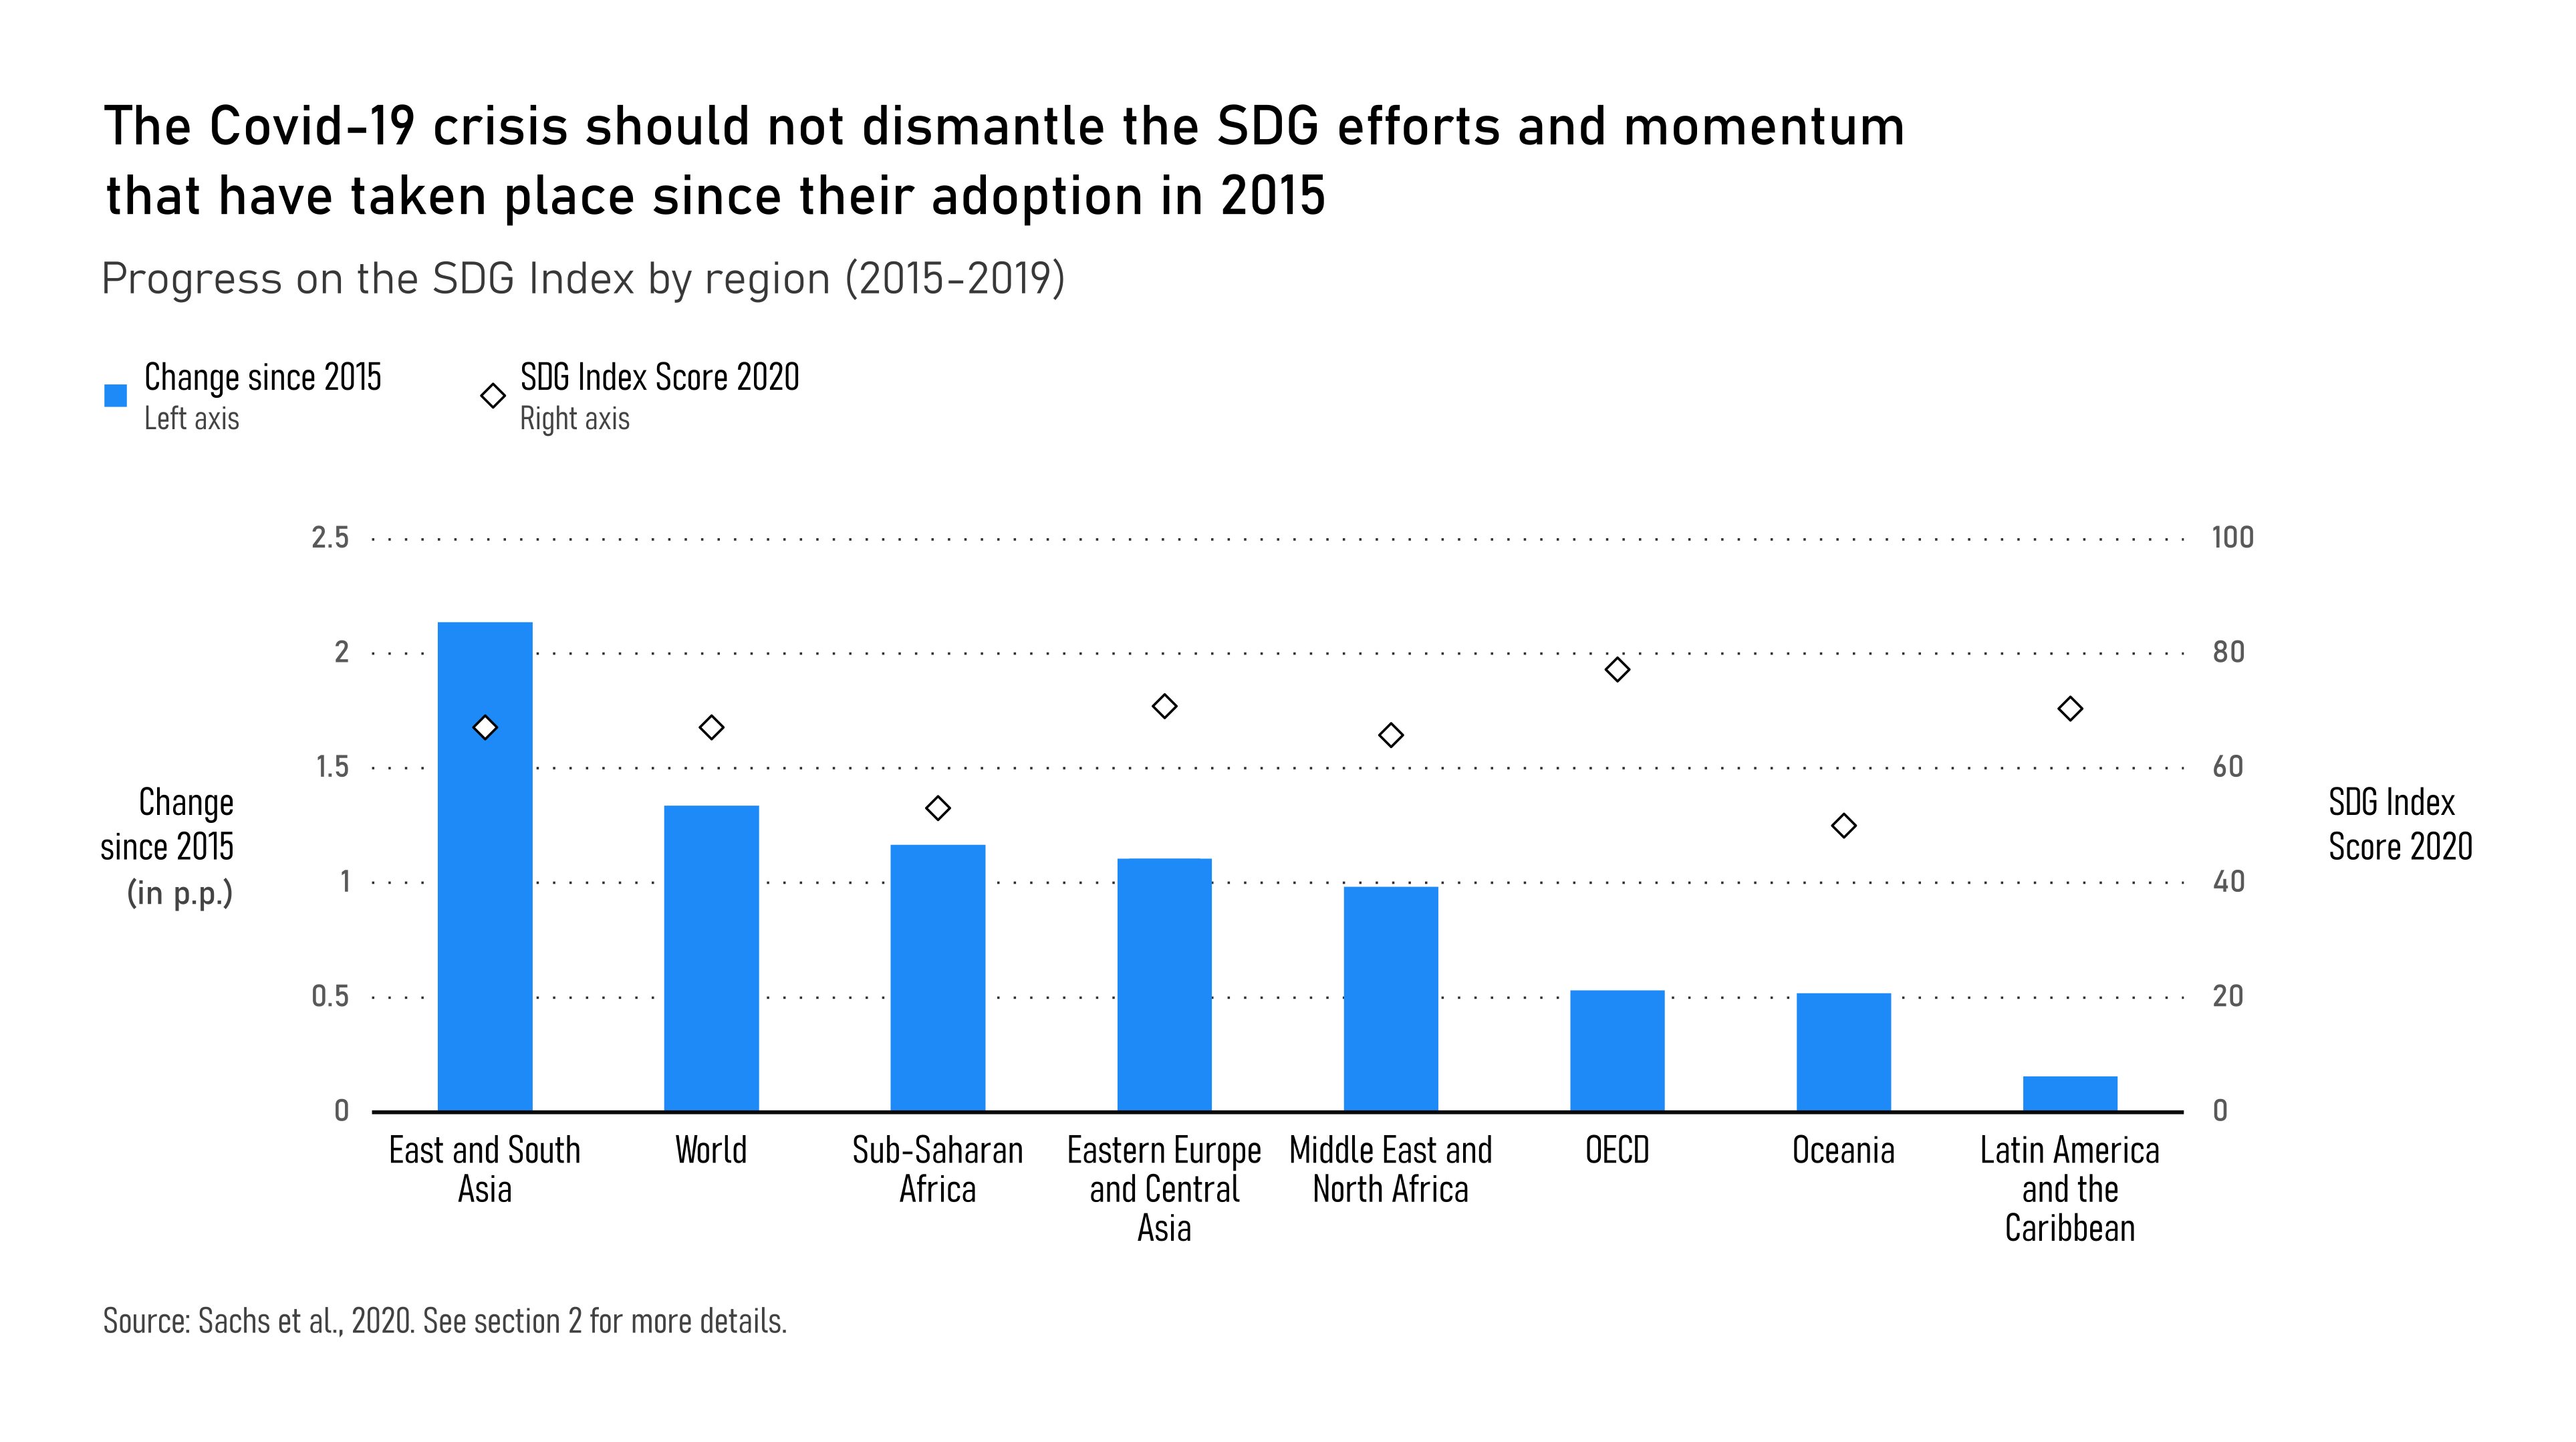 SDG Index Progress by Region